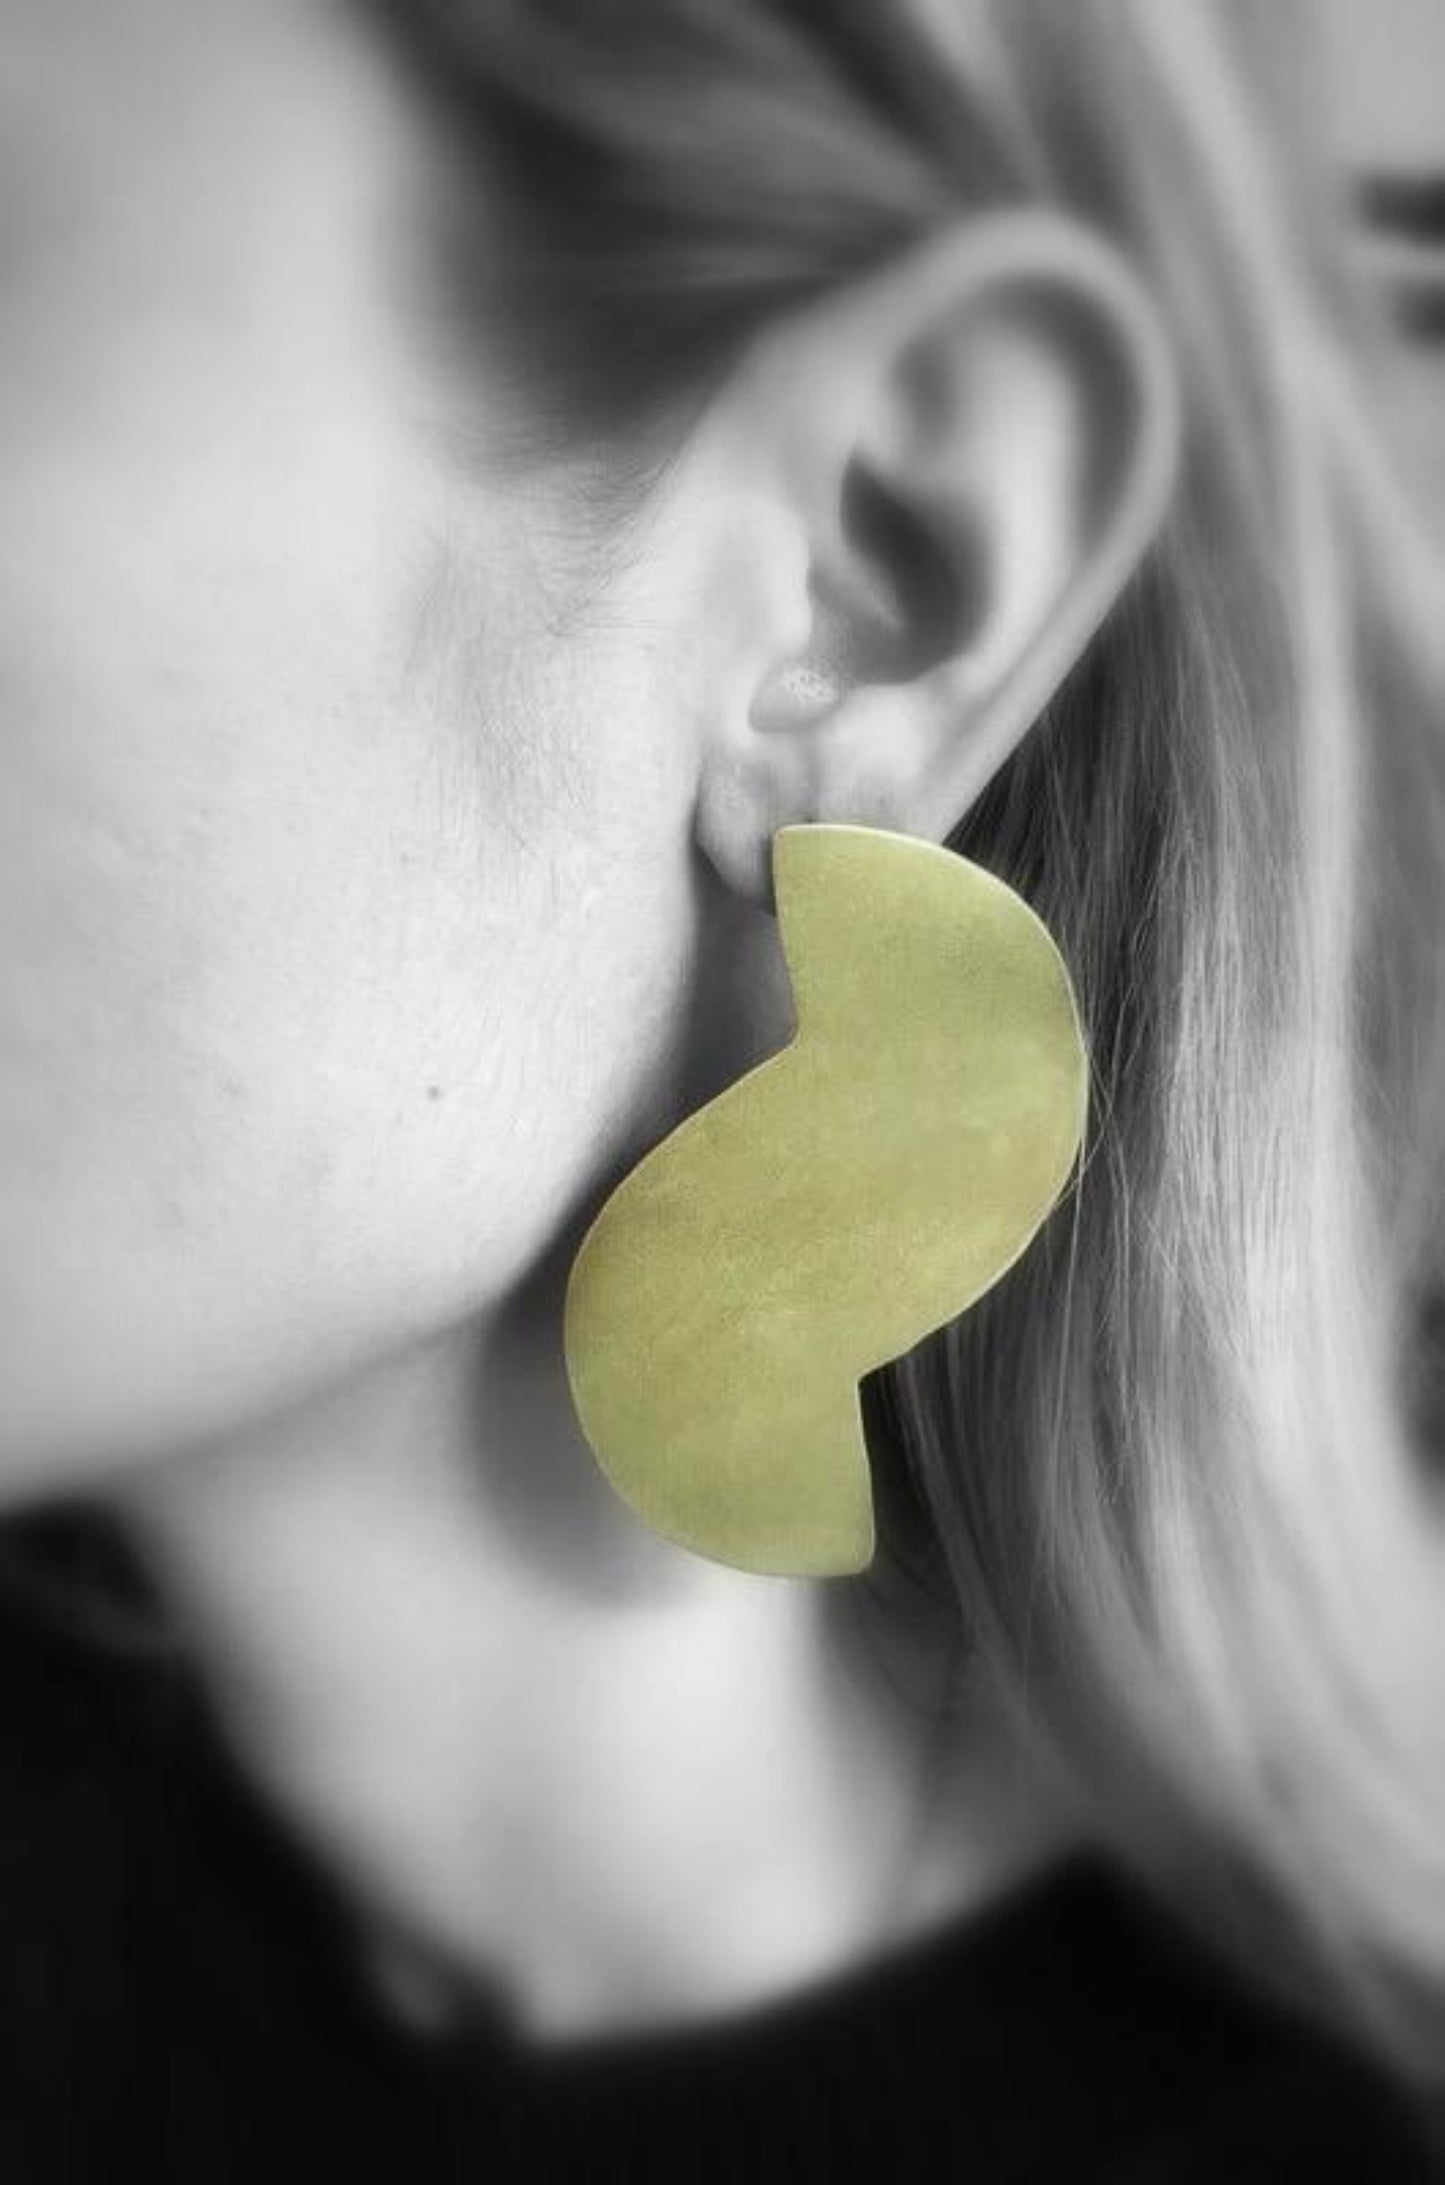 Brass earrings | Yellow Semi Cycles Earrings - CURIUDO